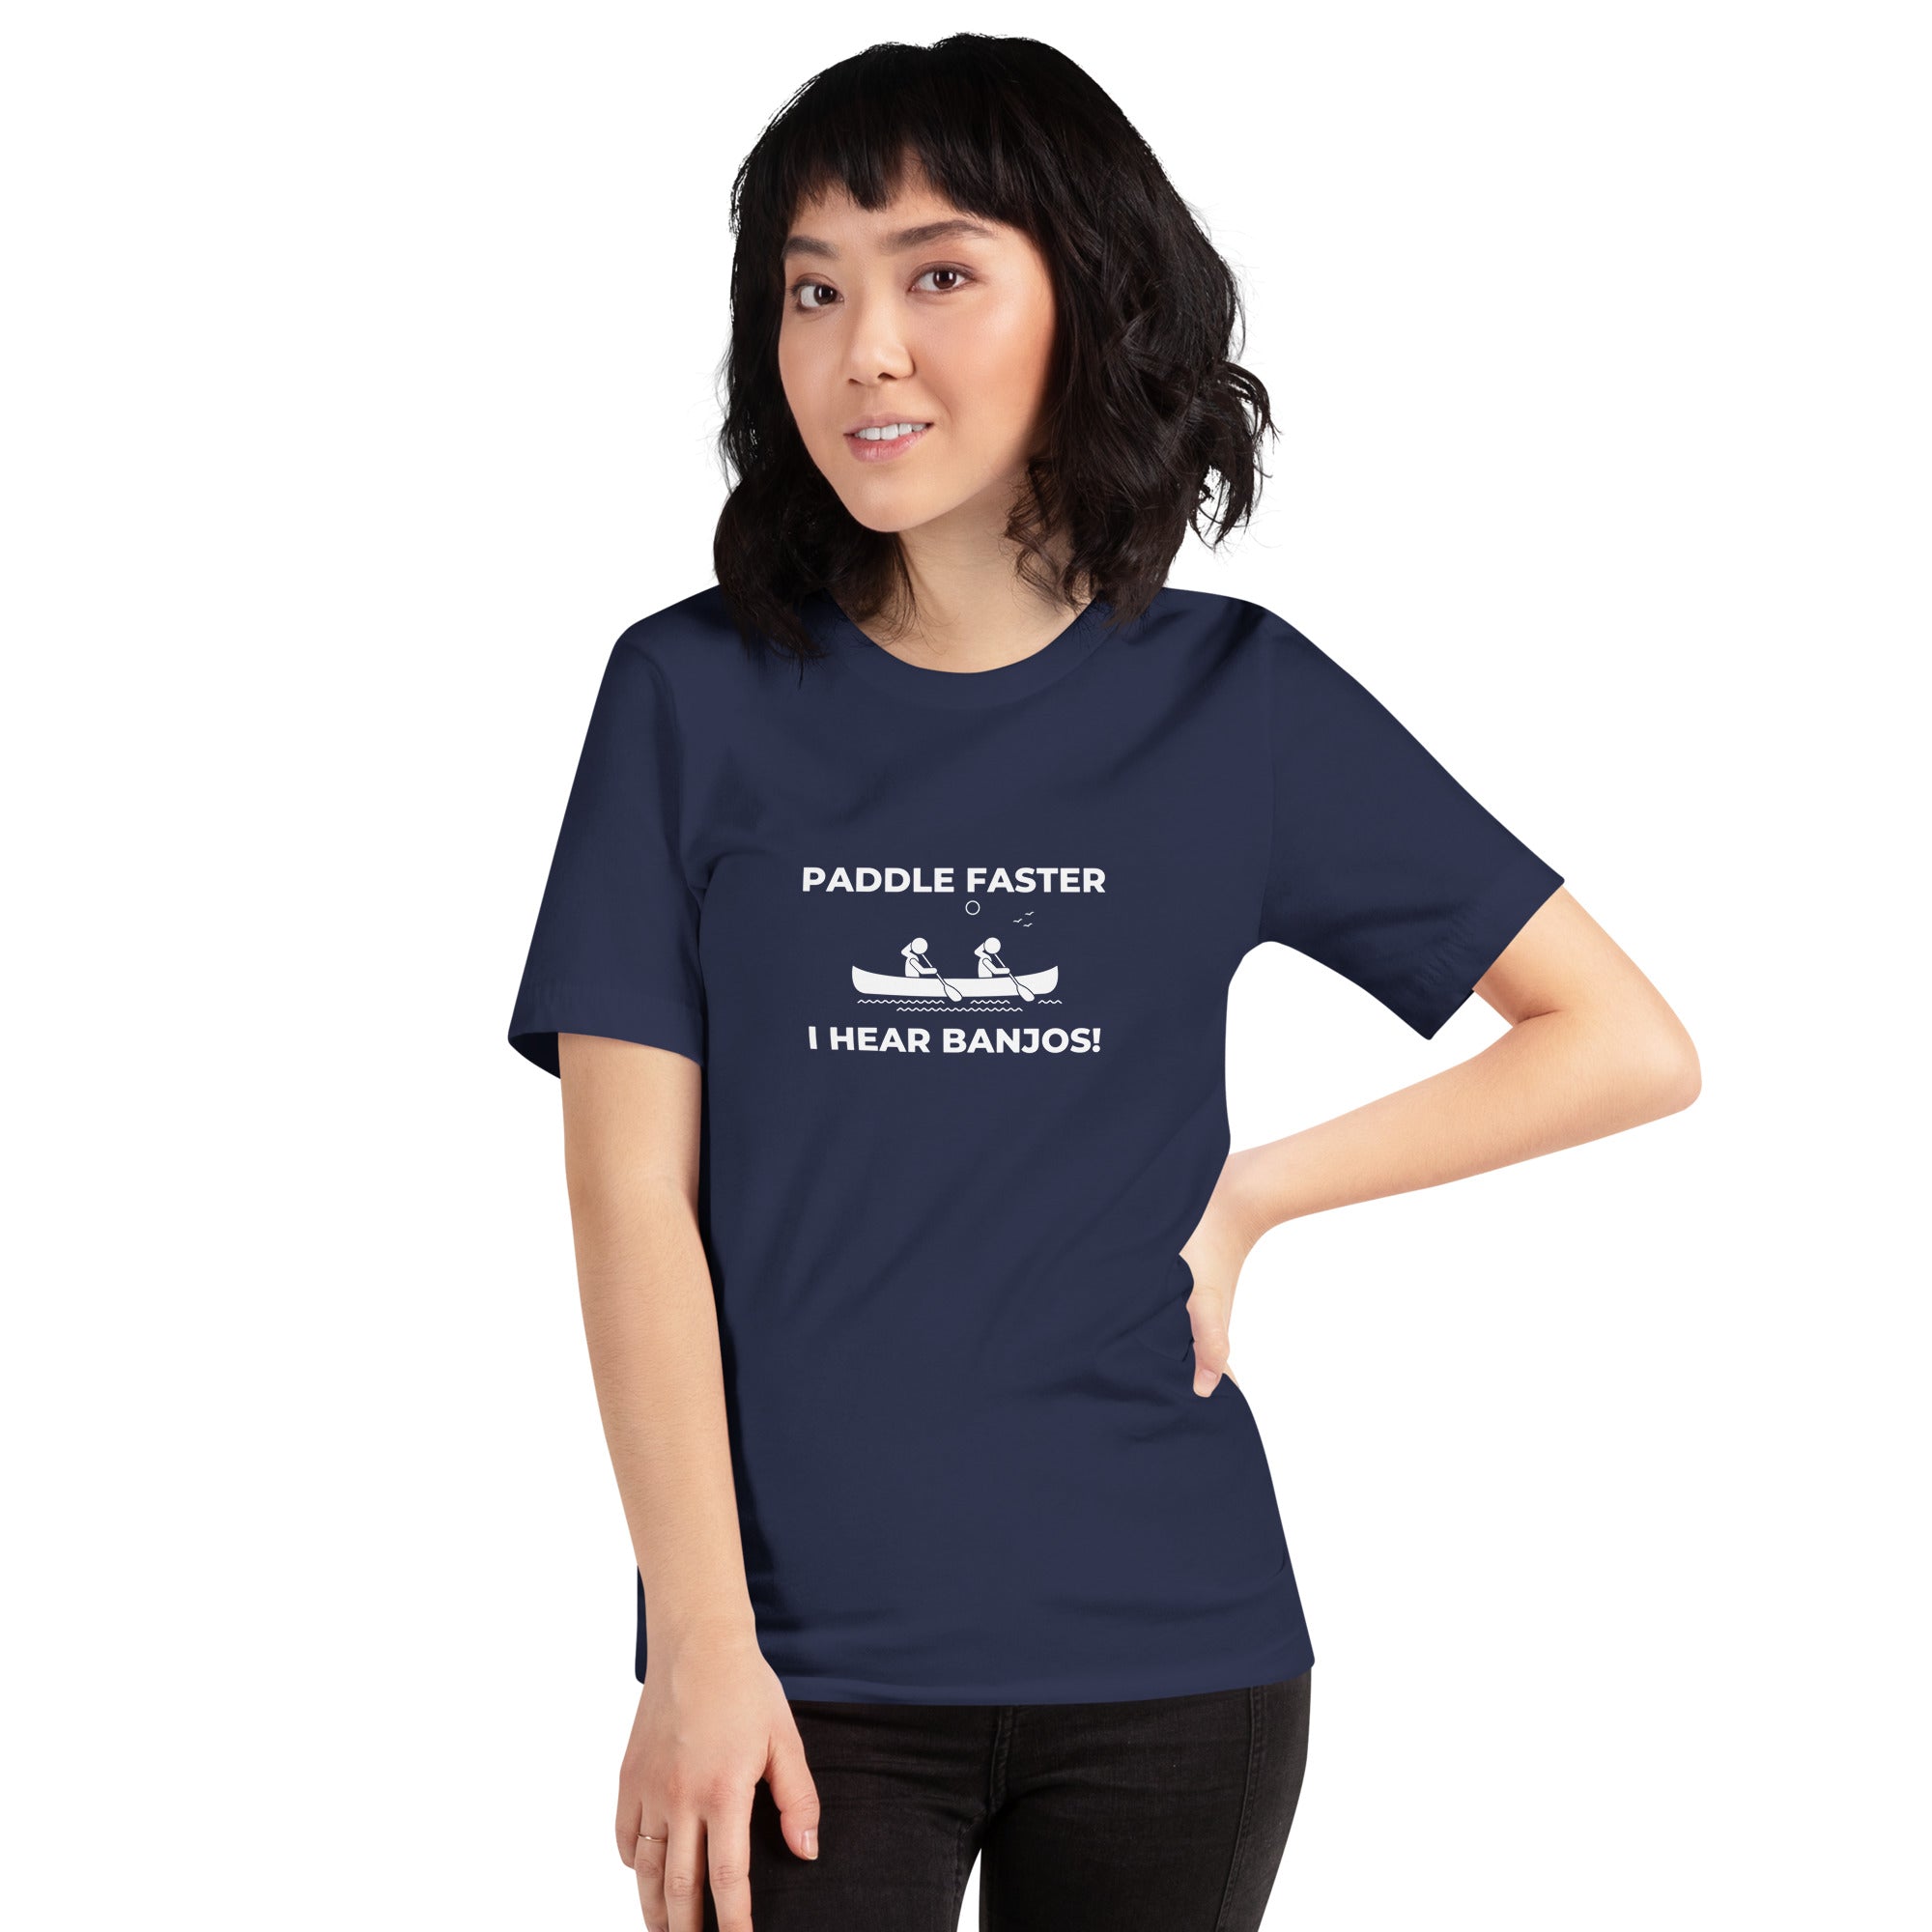 Paddle Faster I Hear Banjos" Funny Kayaking T-shirt for Men | Gift Idea for Outdoor Lovers | Deliverance | Kayaking shirt | Canoe shirt - PennyJellies